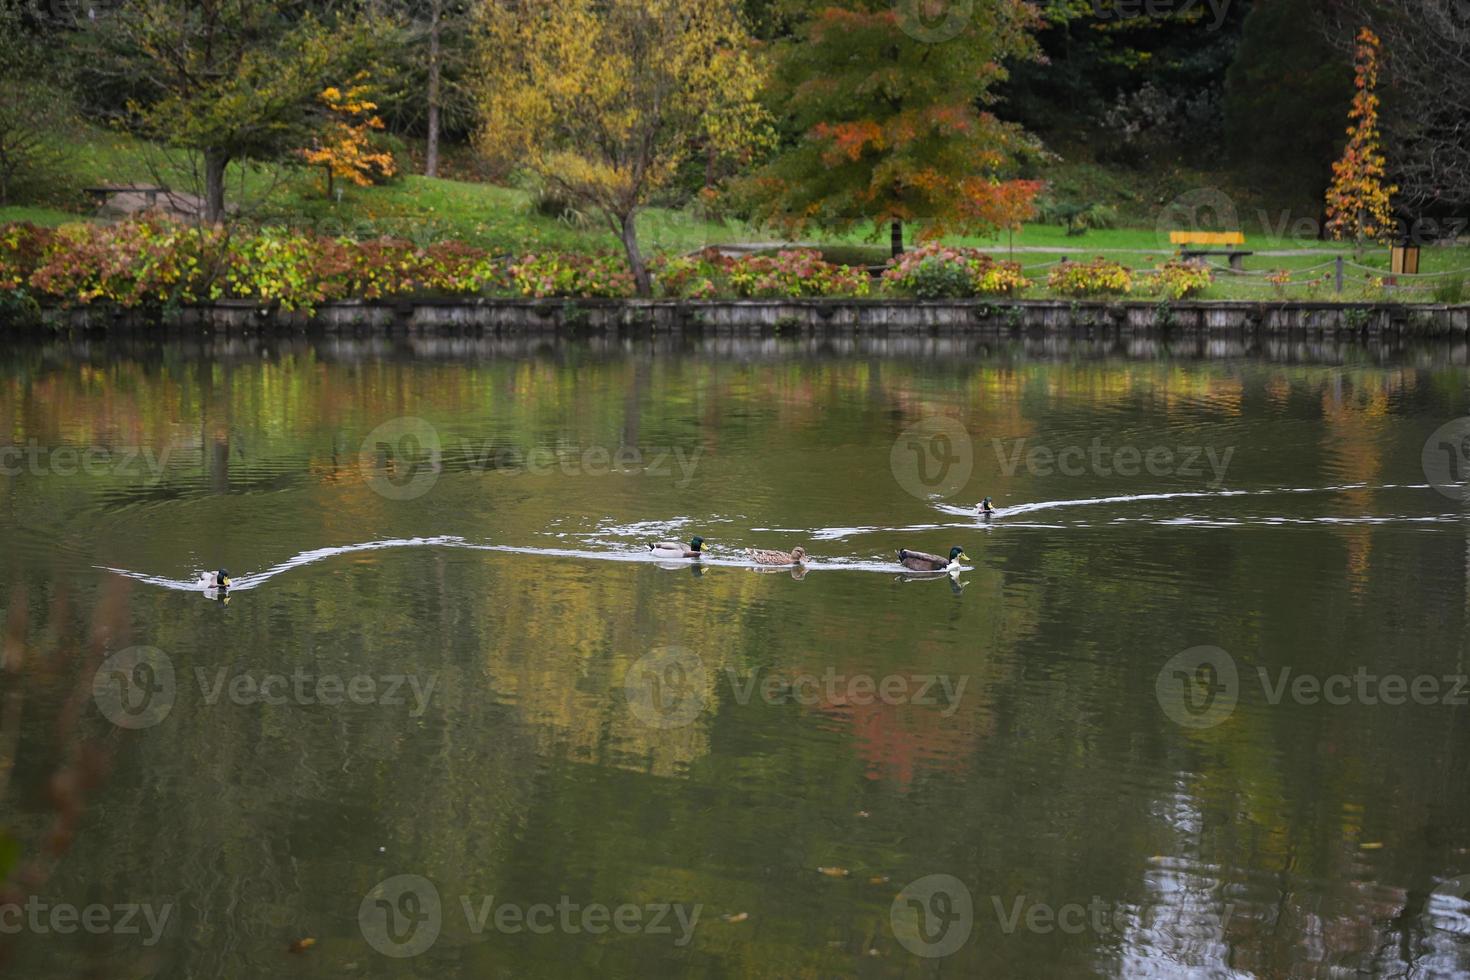 ankor simmar i sjön under hösten foto